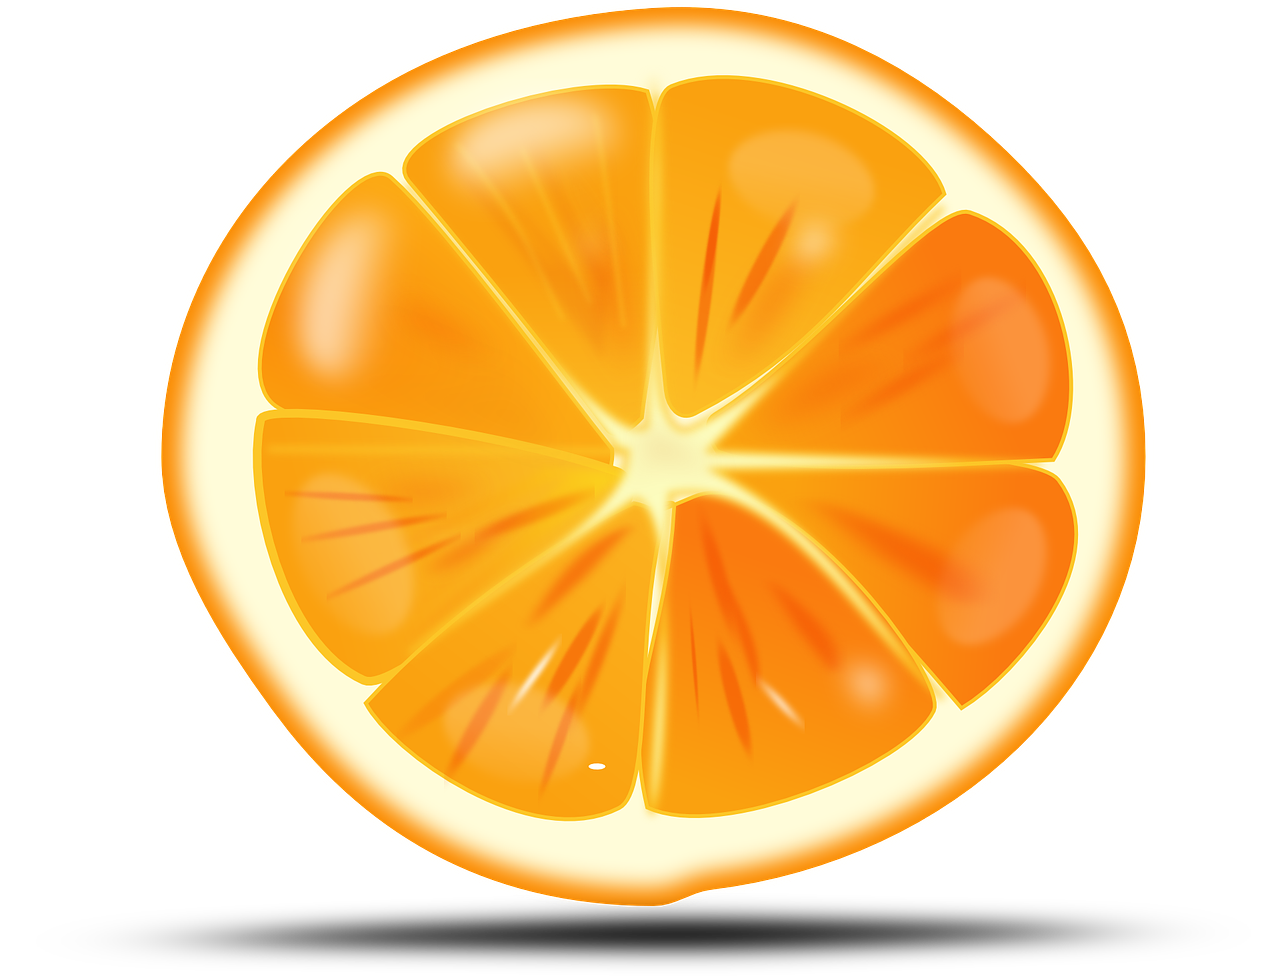 orange citrus sliced free photo